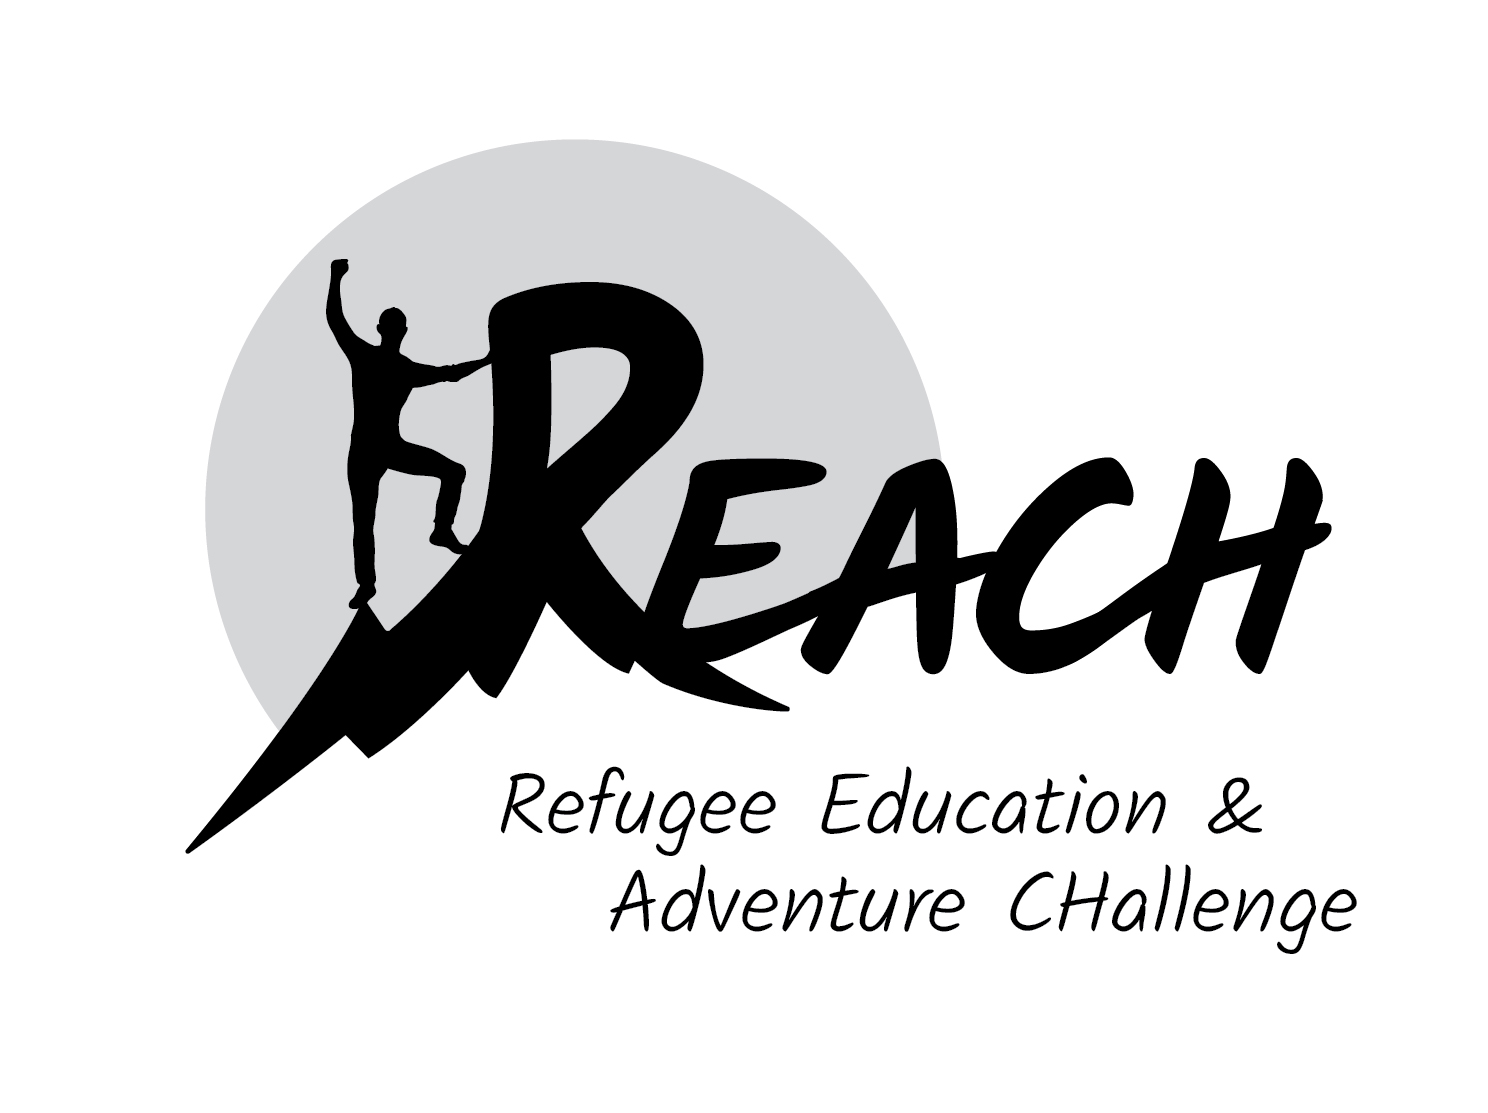 Refugee Education & Adventure Challenge (REACH)